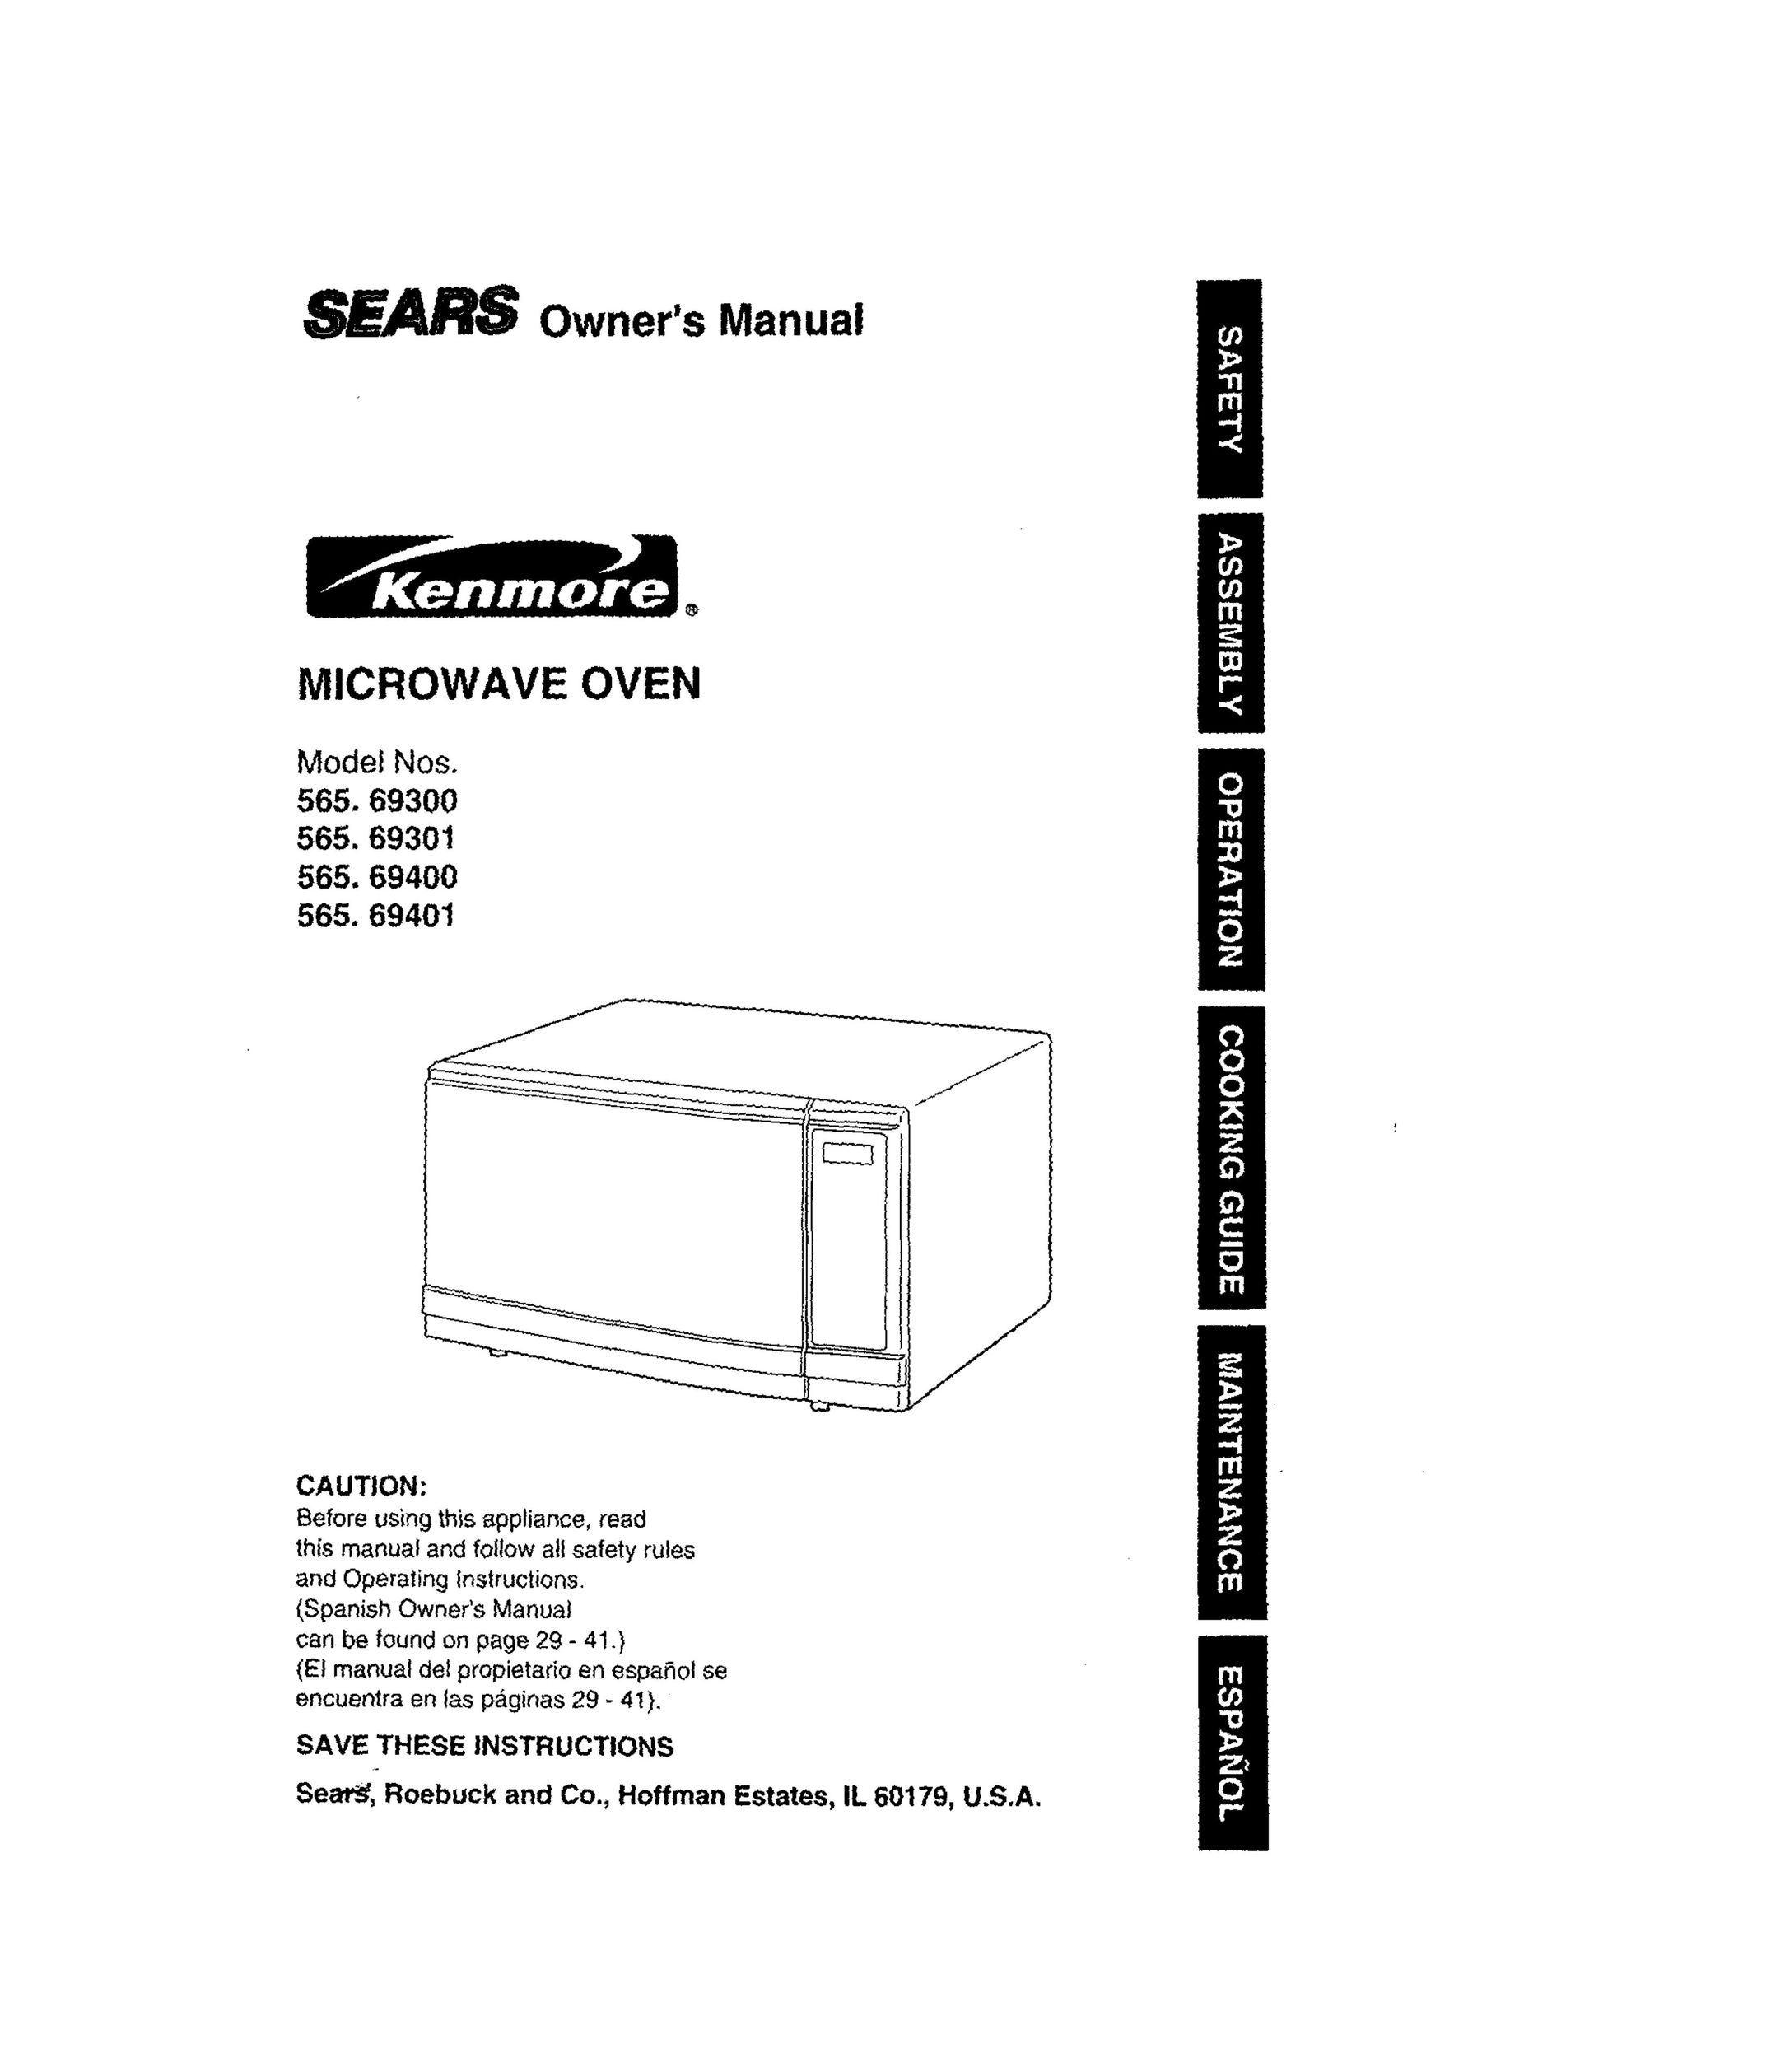 Sears 565.69401 Microwave Oven User Manual